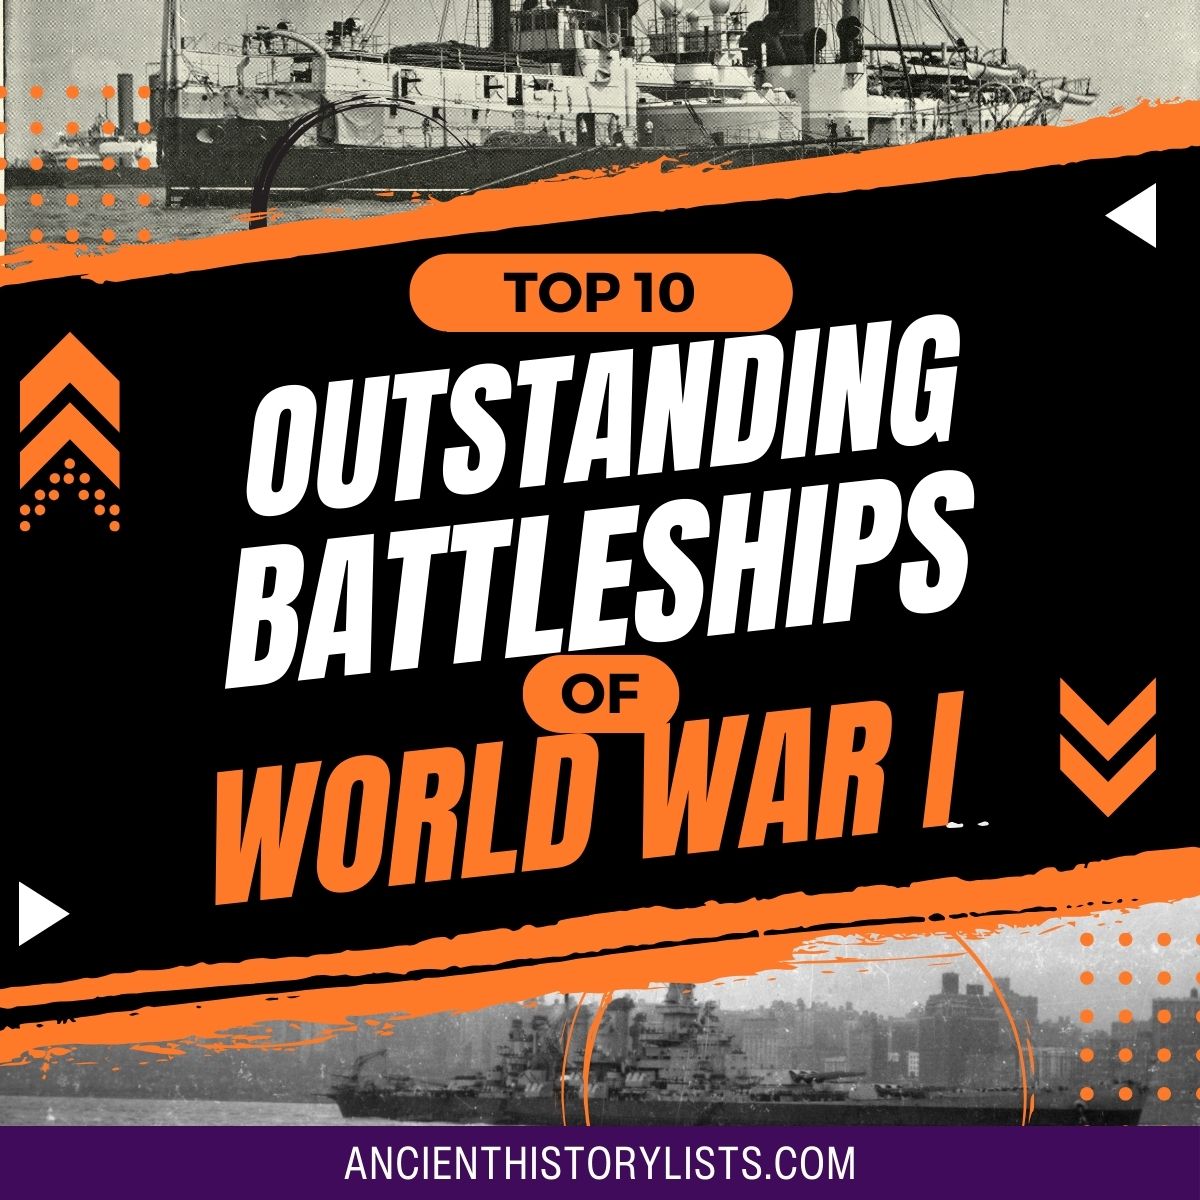 Outstanding Battleships of World War I